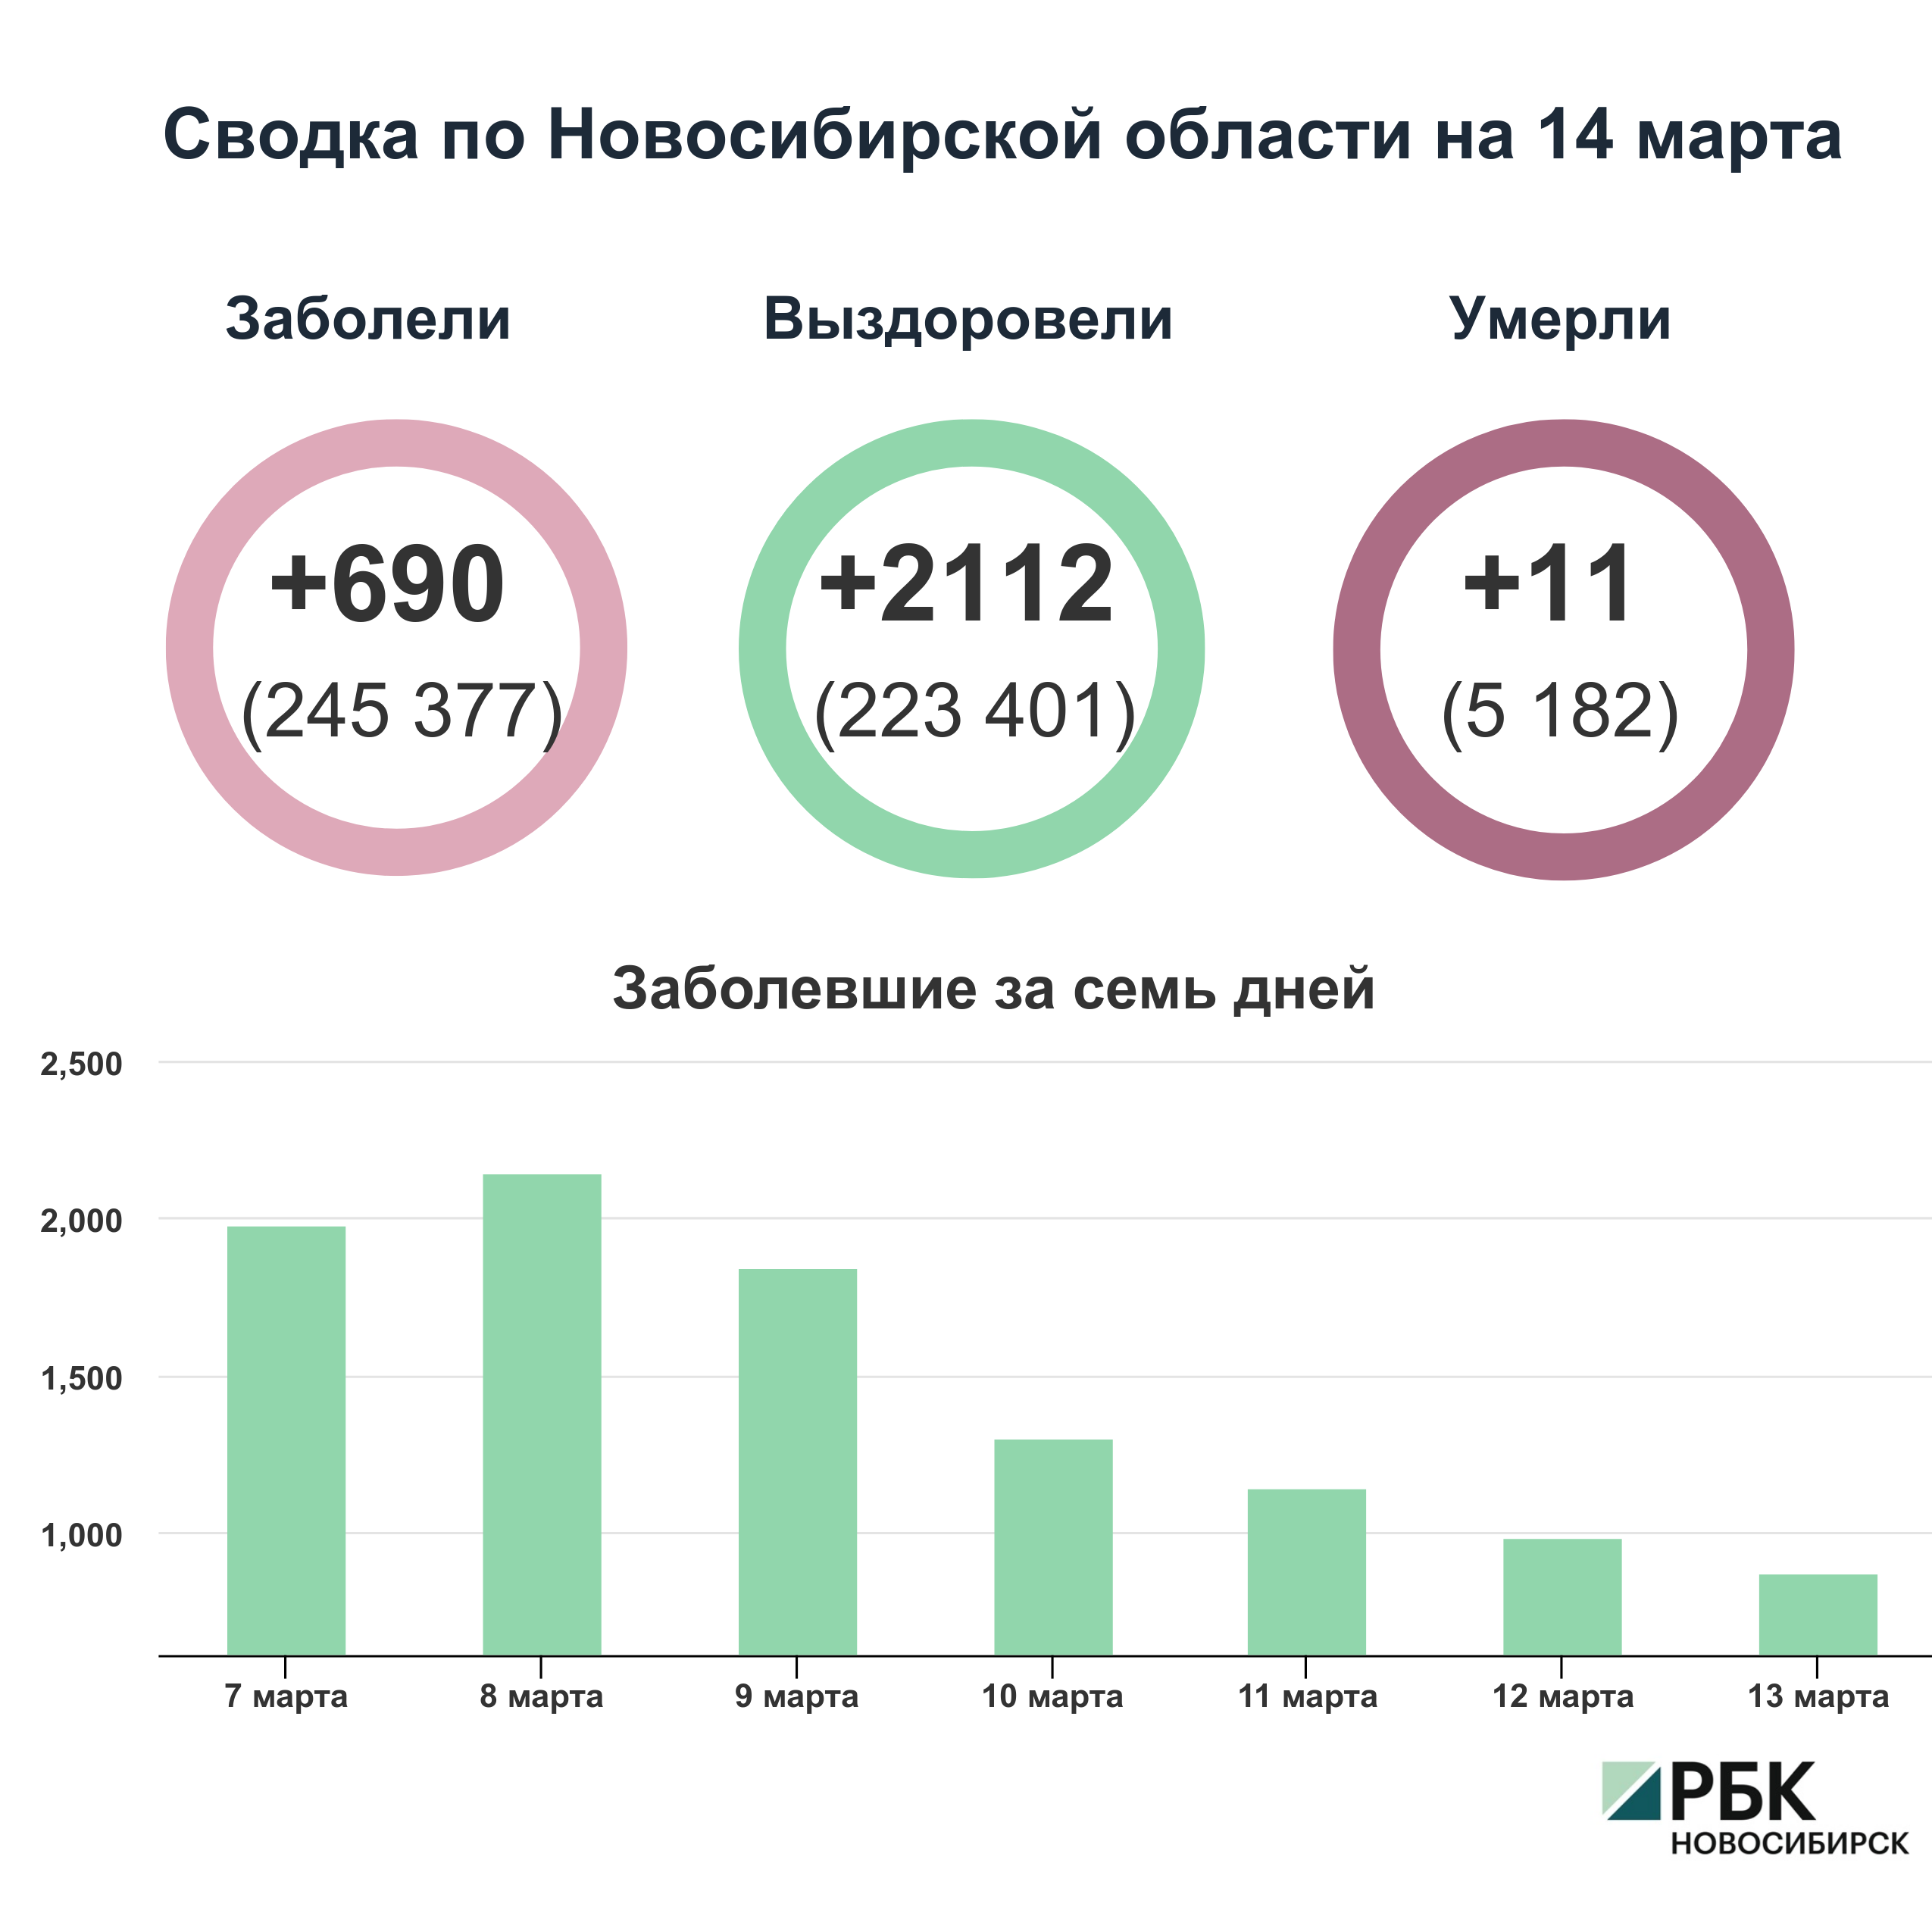 Коронавирус в Новосибирске: сводка на 14 марта